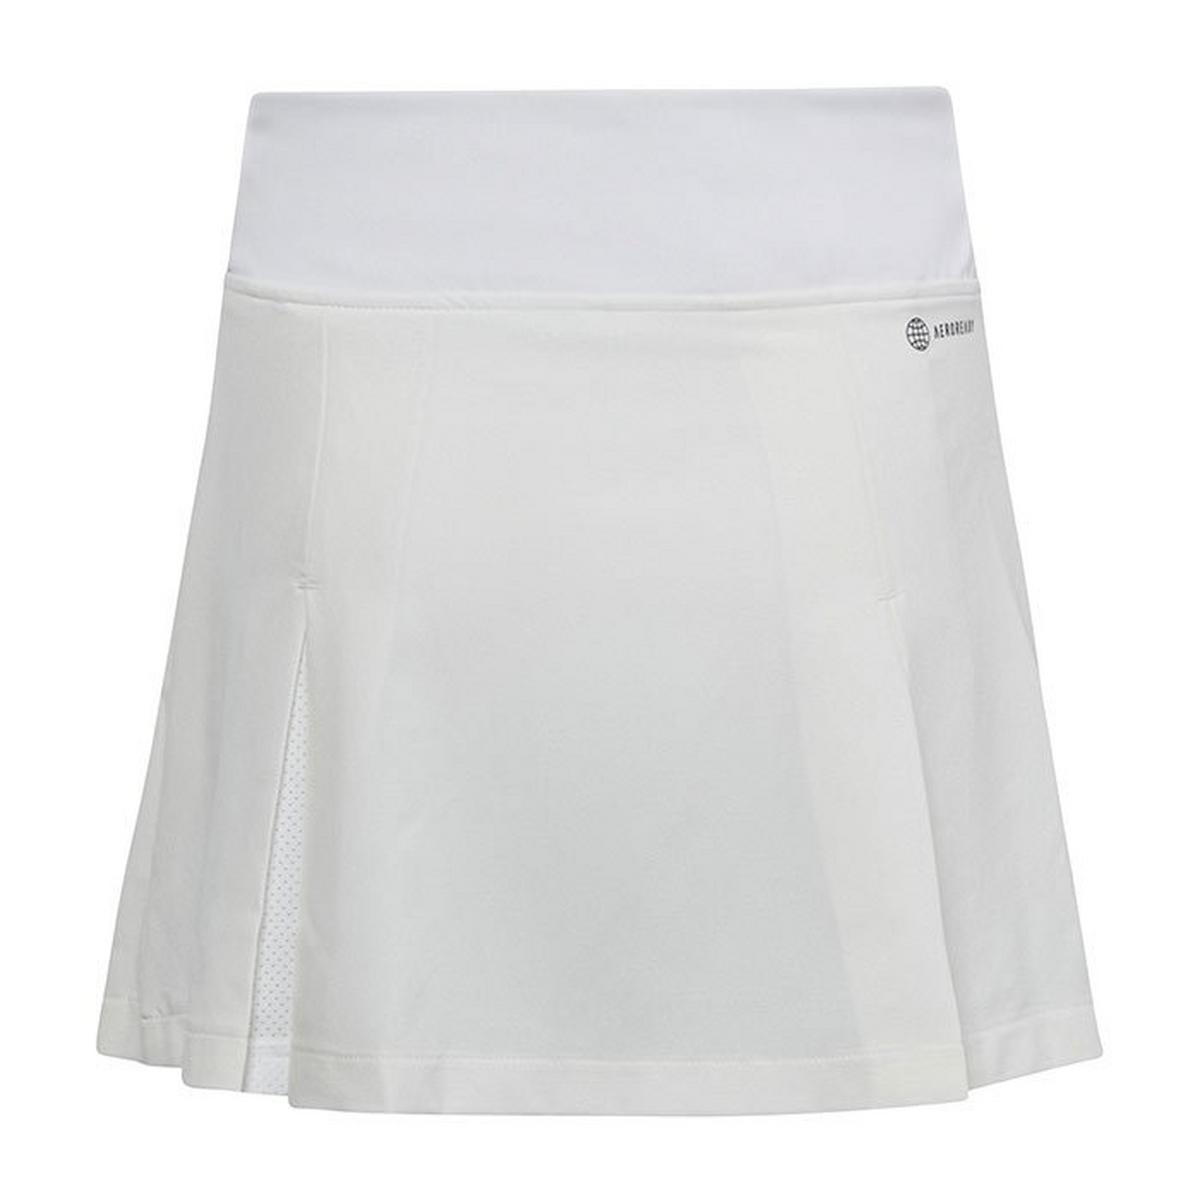 Junior Girls' [8-16] Club Tennis Pleated Skirt